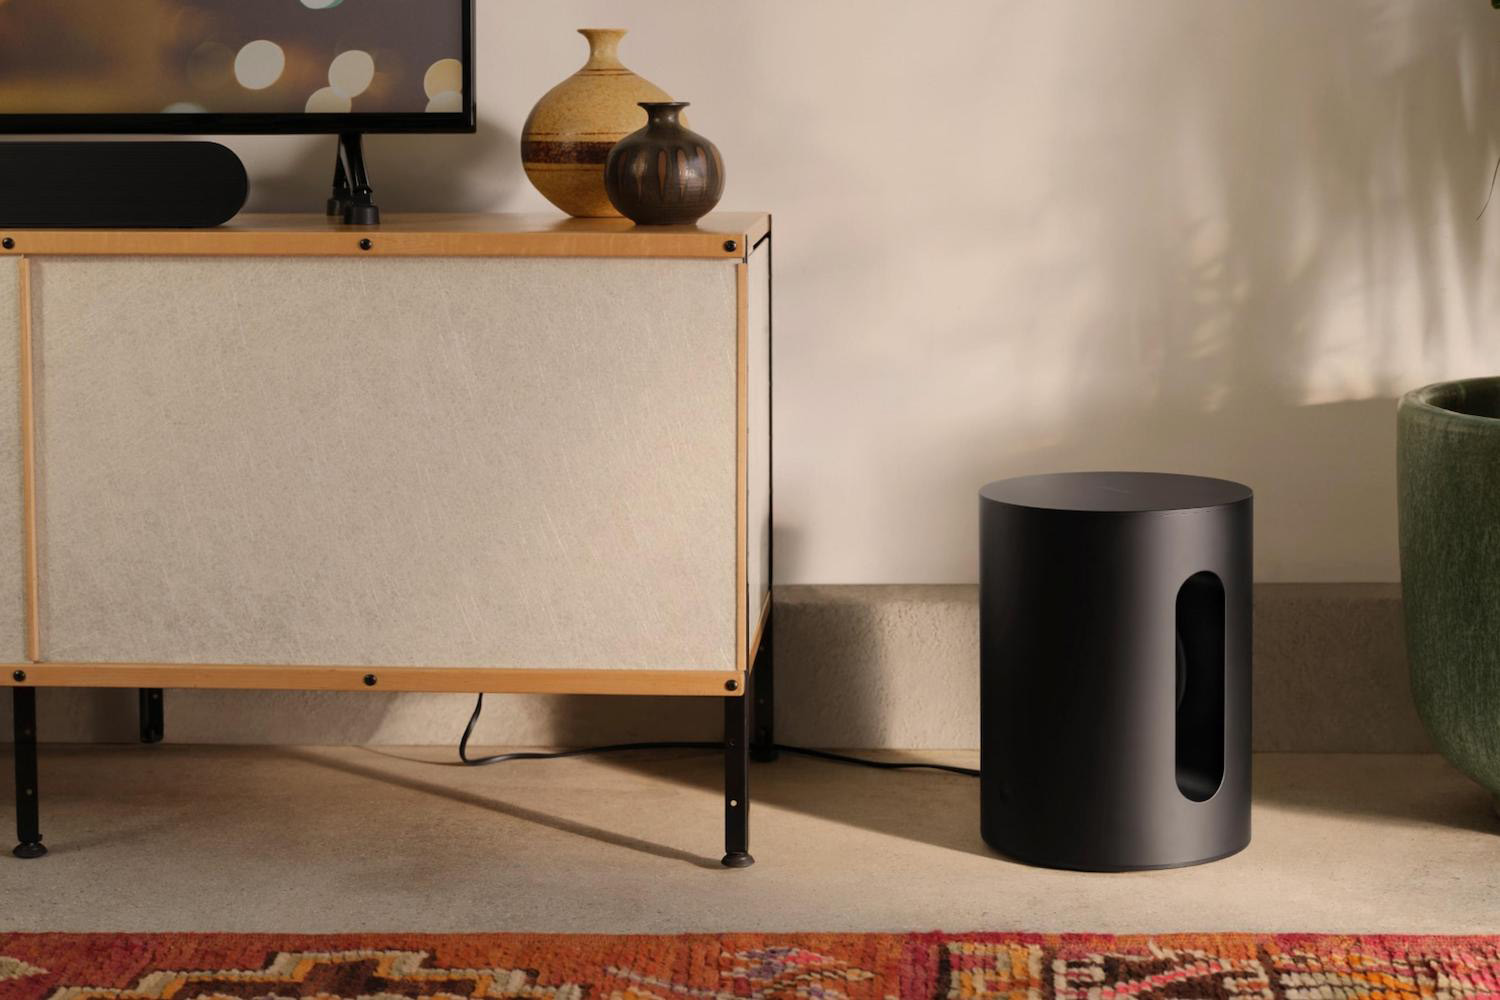 a Sonos Sub Mini speaker in a house setting